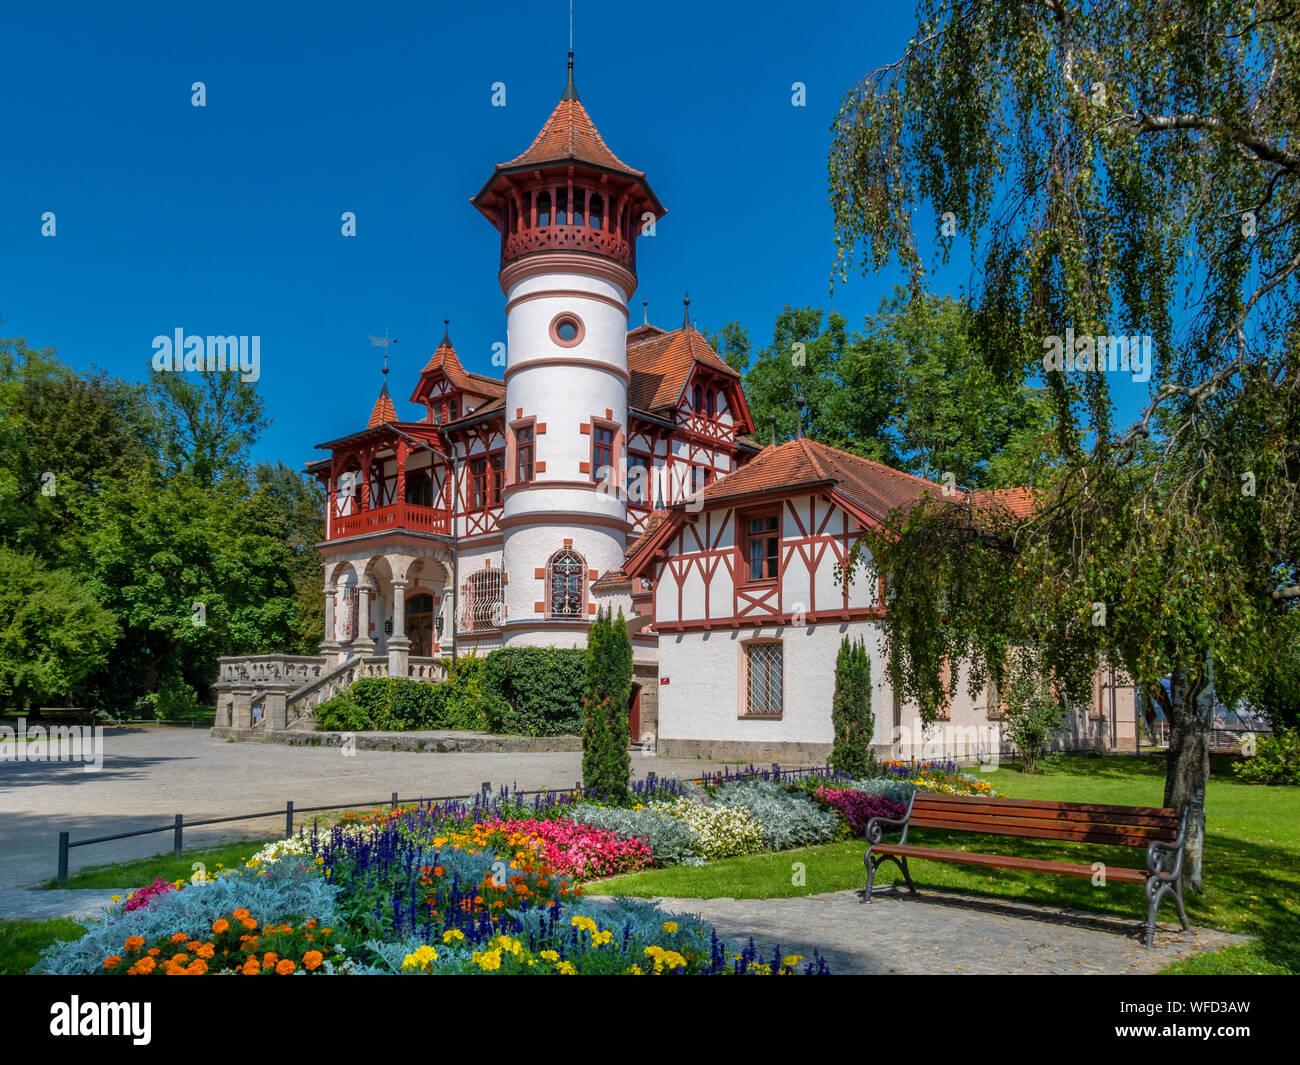 Villa Scheuermann, Kurparkschloessl au château à Herrsching am Ammersee, lac Ammer, Upper Bavaria, Bavaria, Germany, Europe Banque D'Images